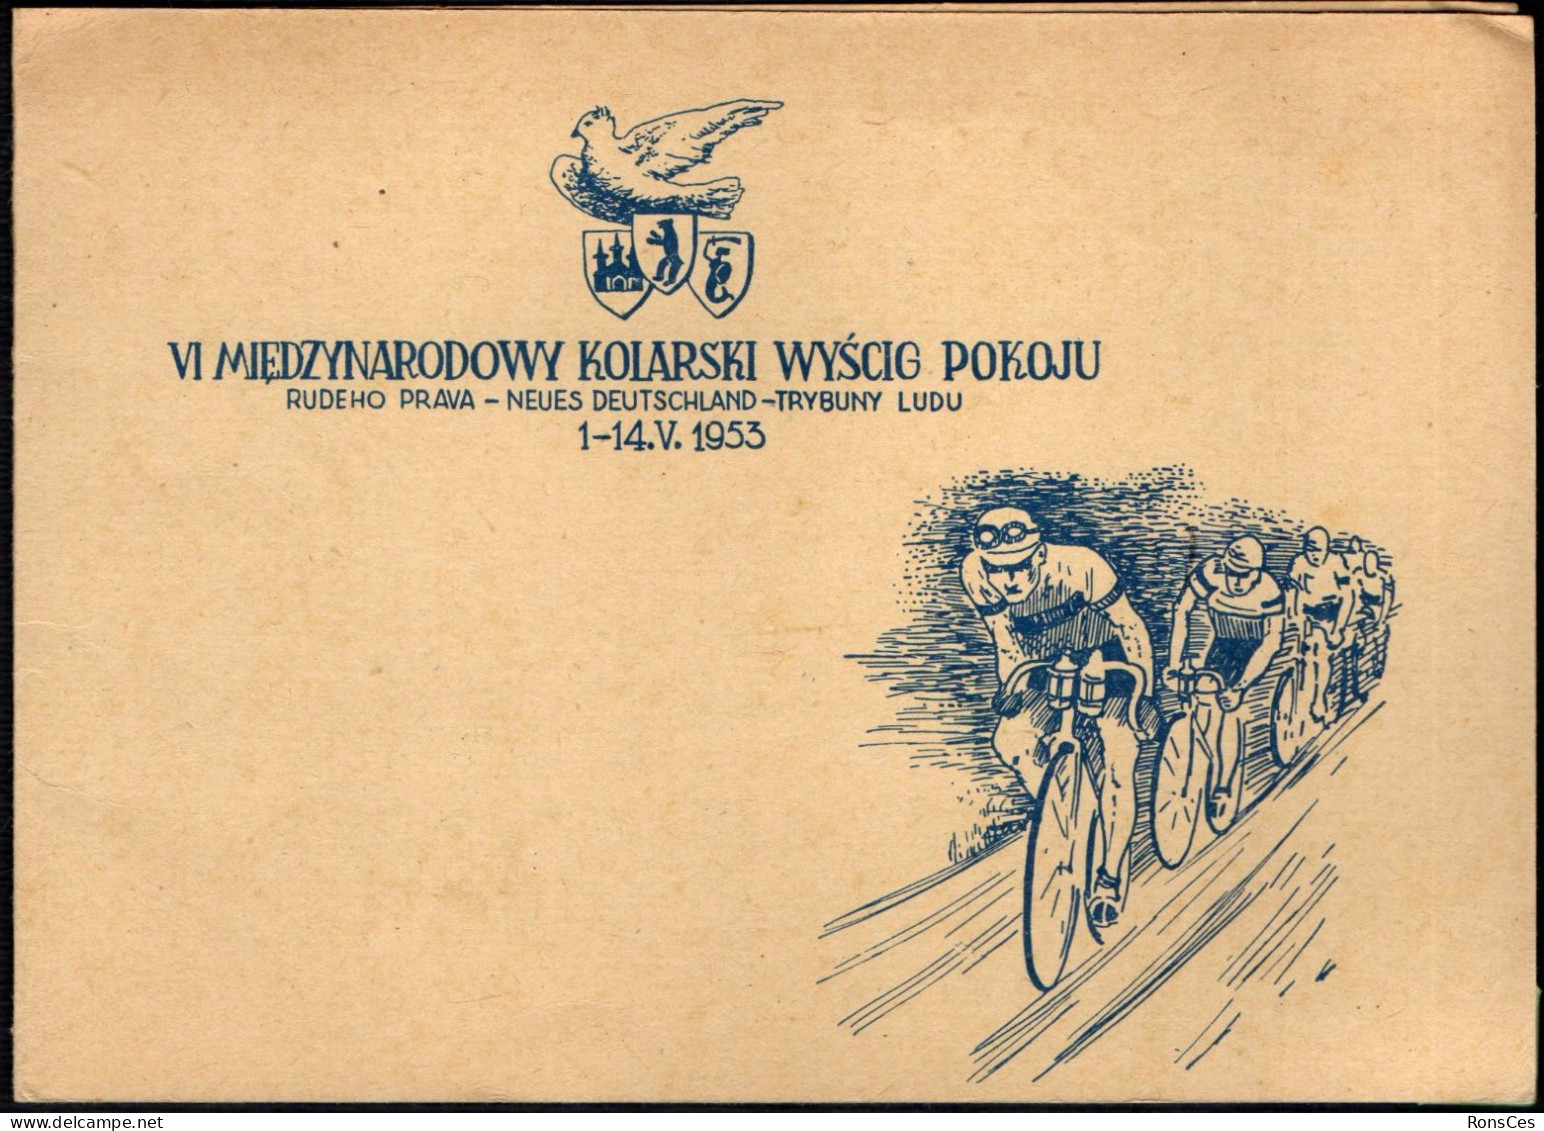 CYCLING - POLAND 1953 - THE INTERNATIONAL CYCLING RACE OF PEACE - SMALL FOLDER - A - Radsport